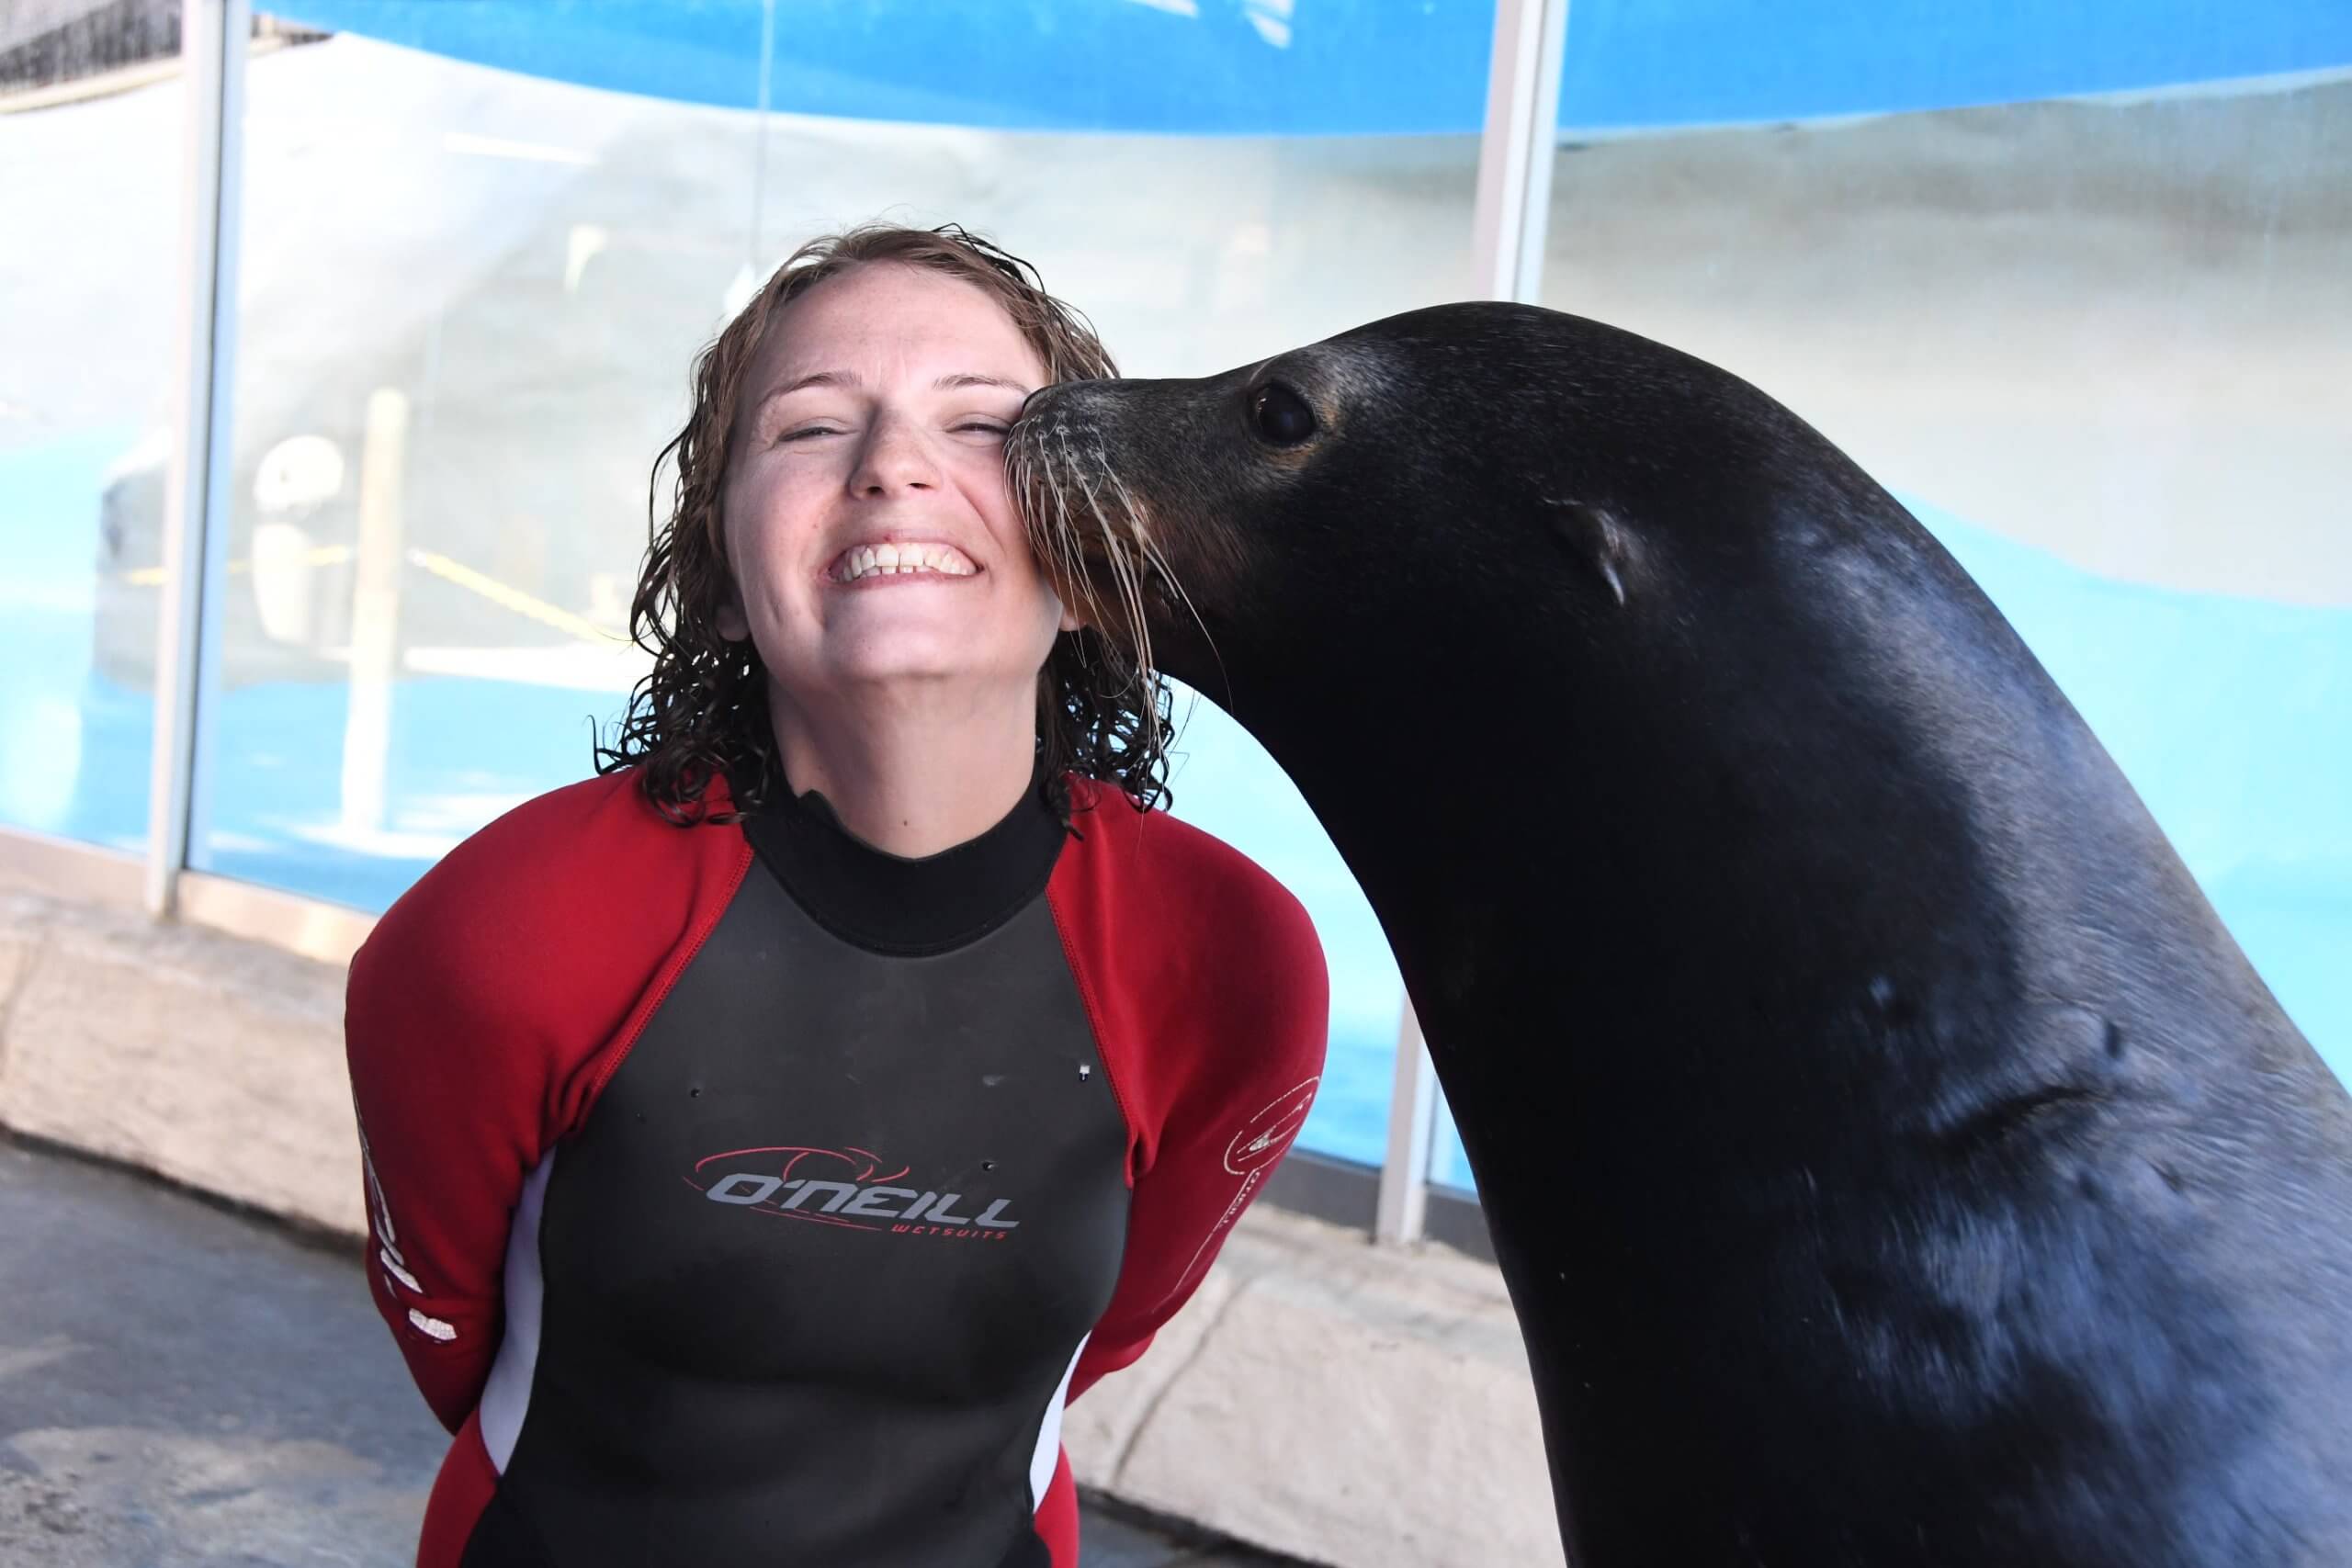 Sea Lion And Harbor Seal Meet N Greet Gulf World Marine Park